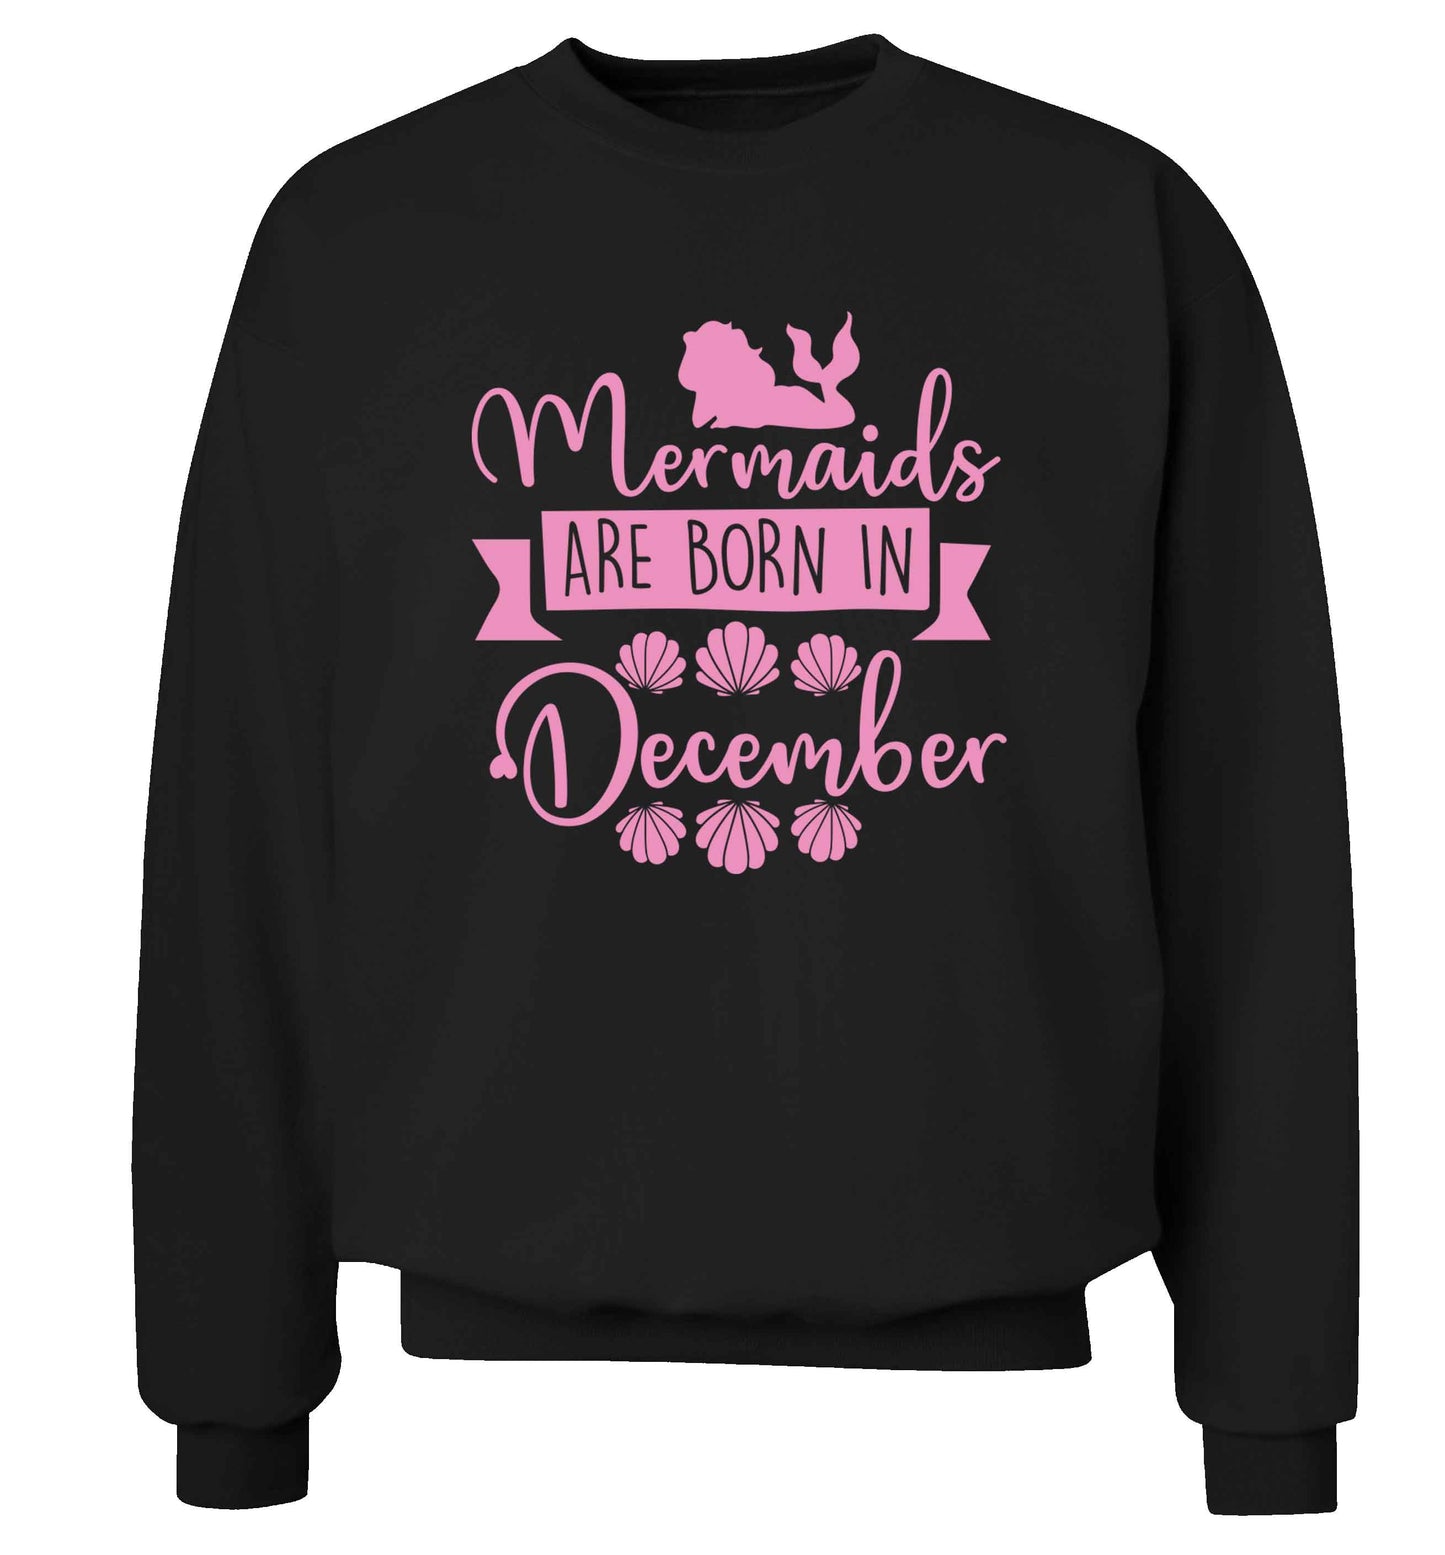 Mermaids are born in December Adult's unisex black Sweater 2XL